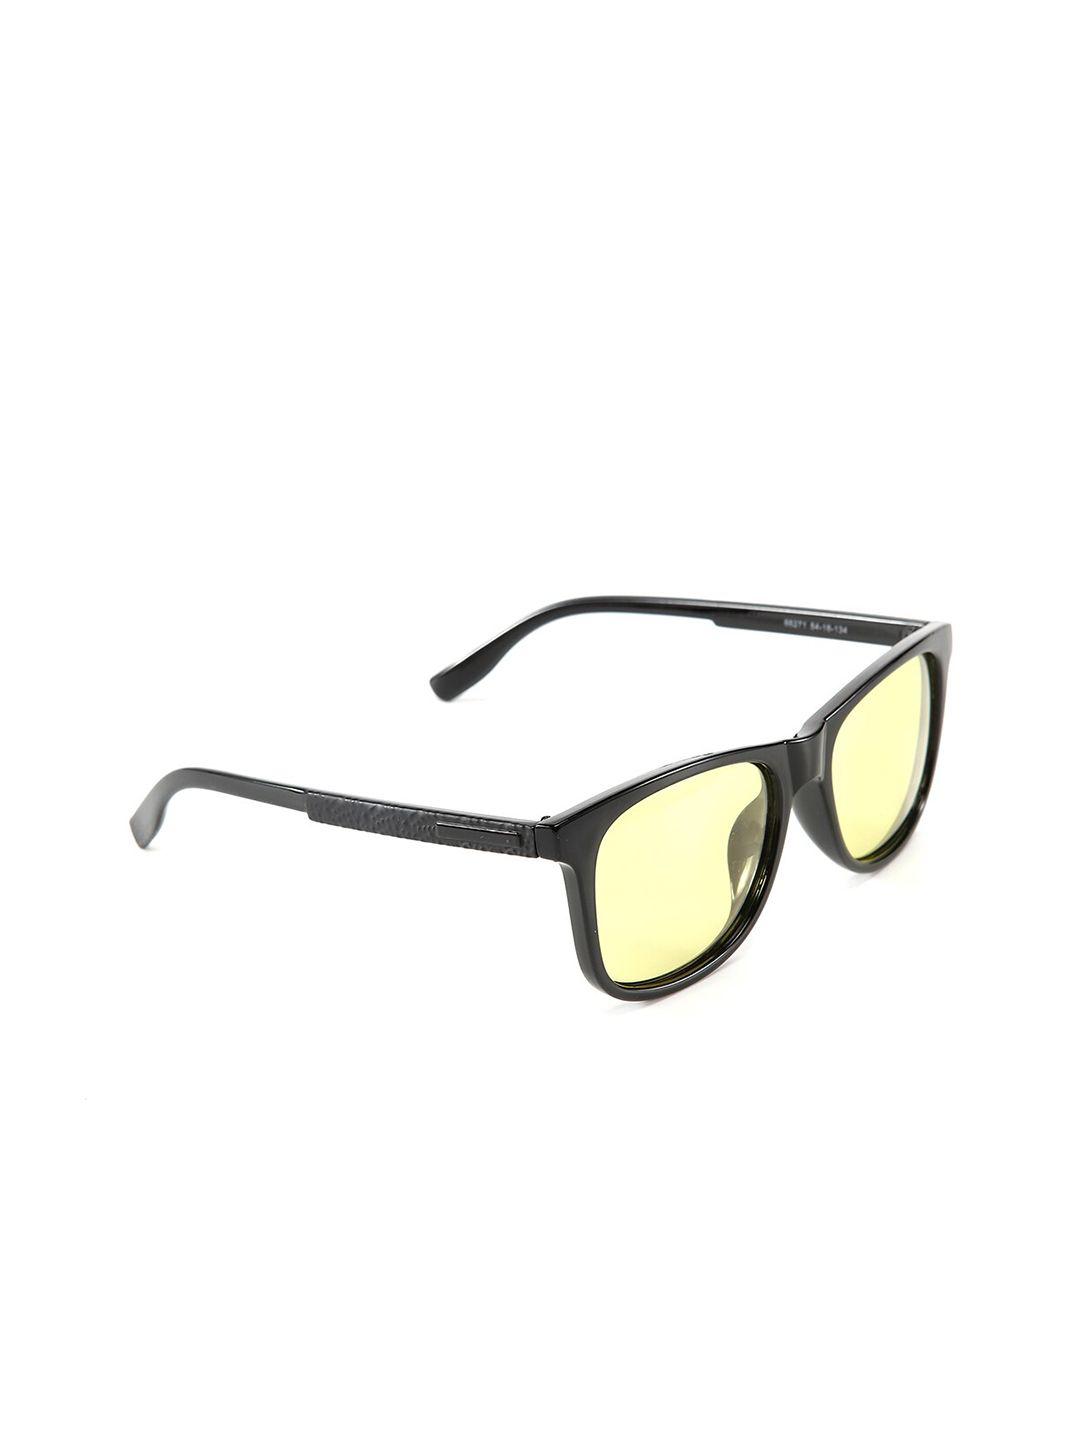 intellilens unisex yellow lens & black square uv protected hd sunglasses 1000000060968